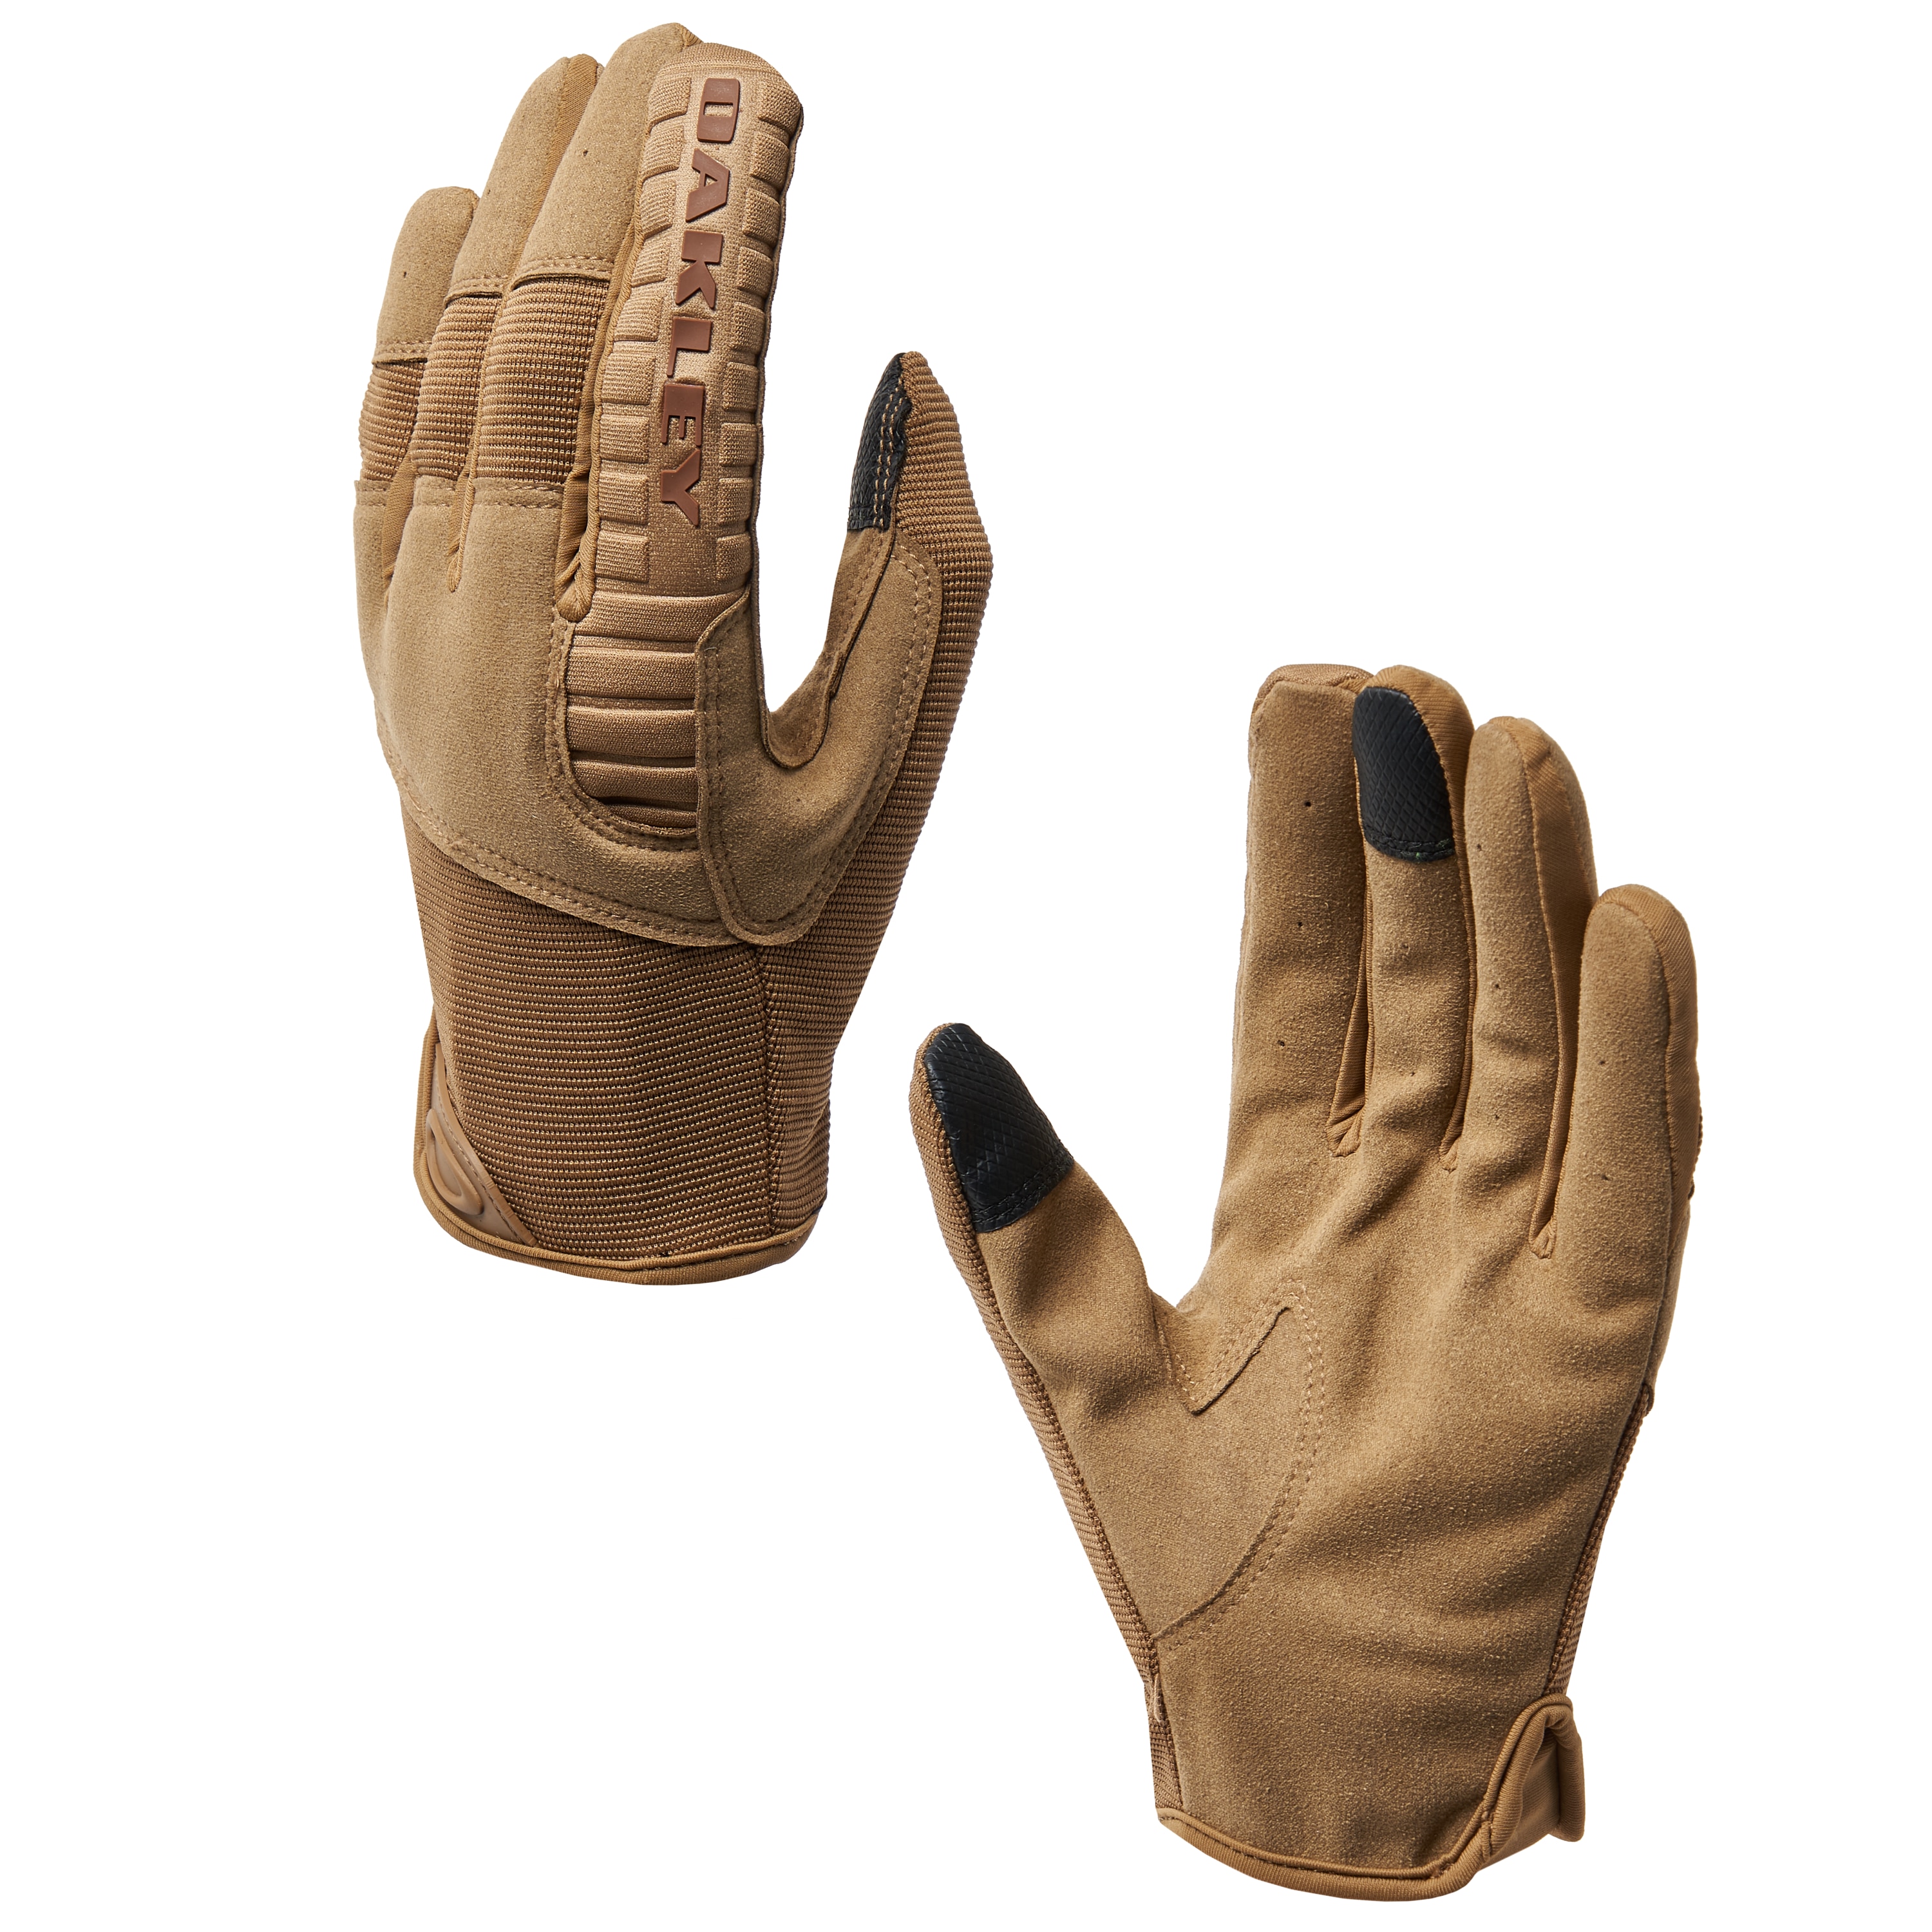 oakley tactical gloves amazon